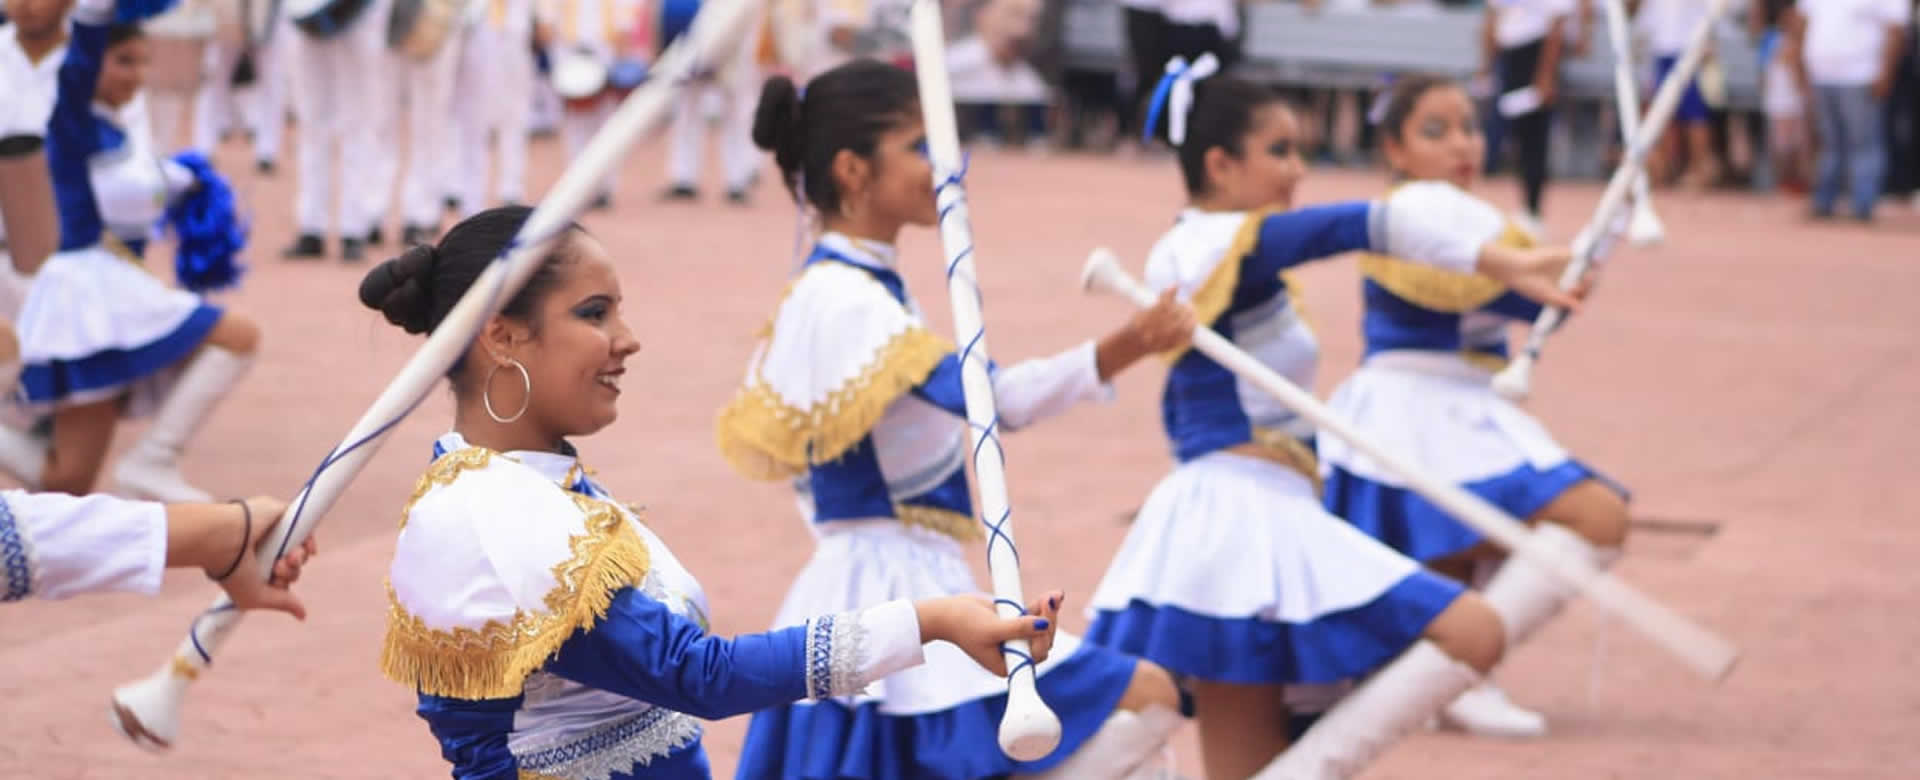 Orgullo de ser nicaragüense se manifiesta en desfile patrio de Managua